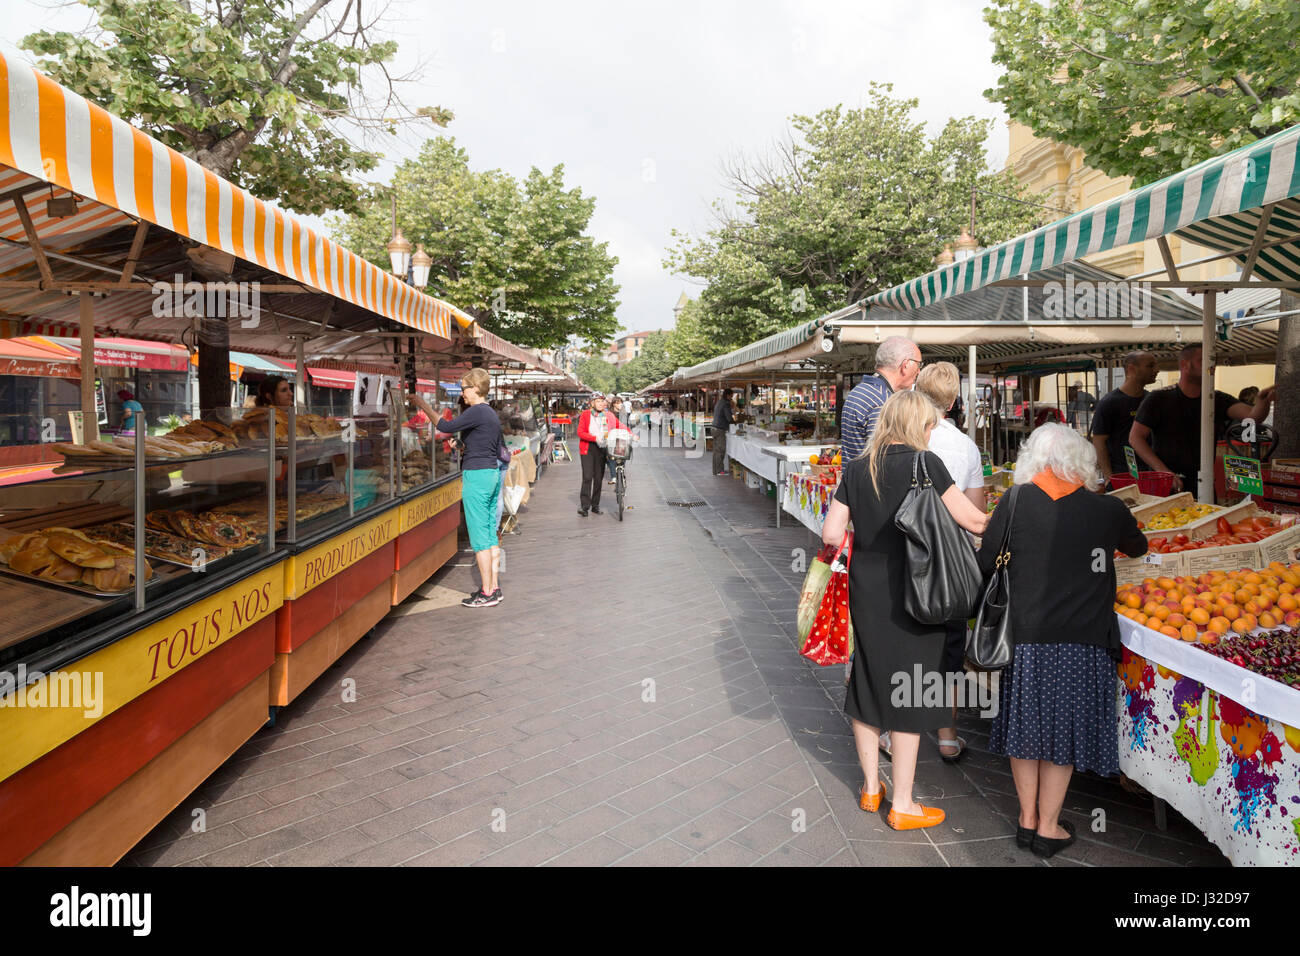 France, Nice, Market of Cours de Selaya, Les Ponchettes, market stalls. Stock Photo